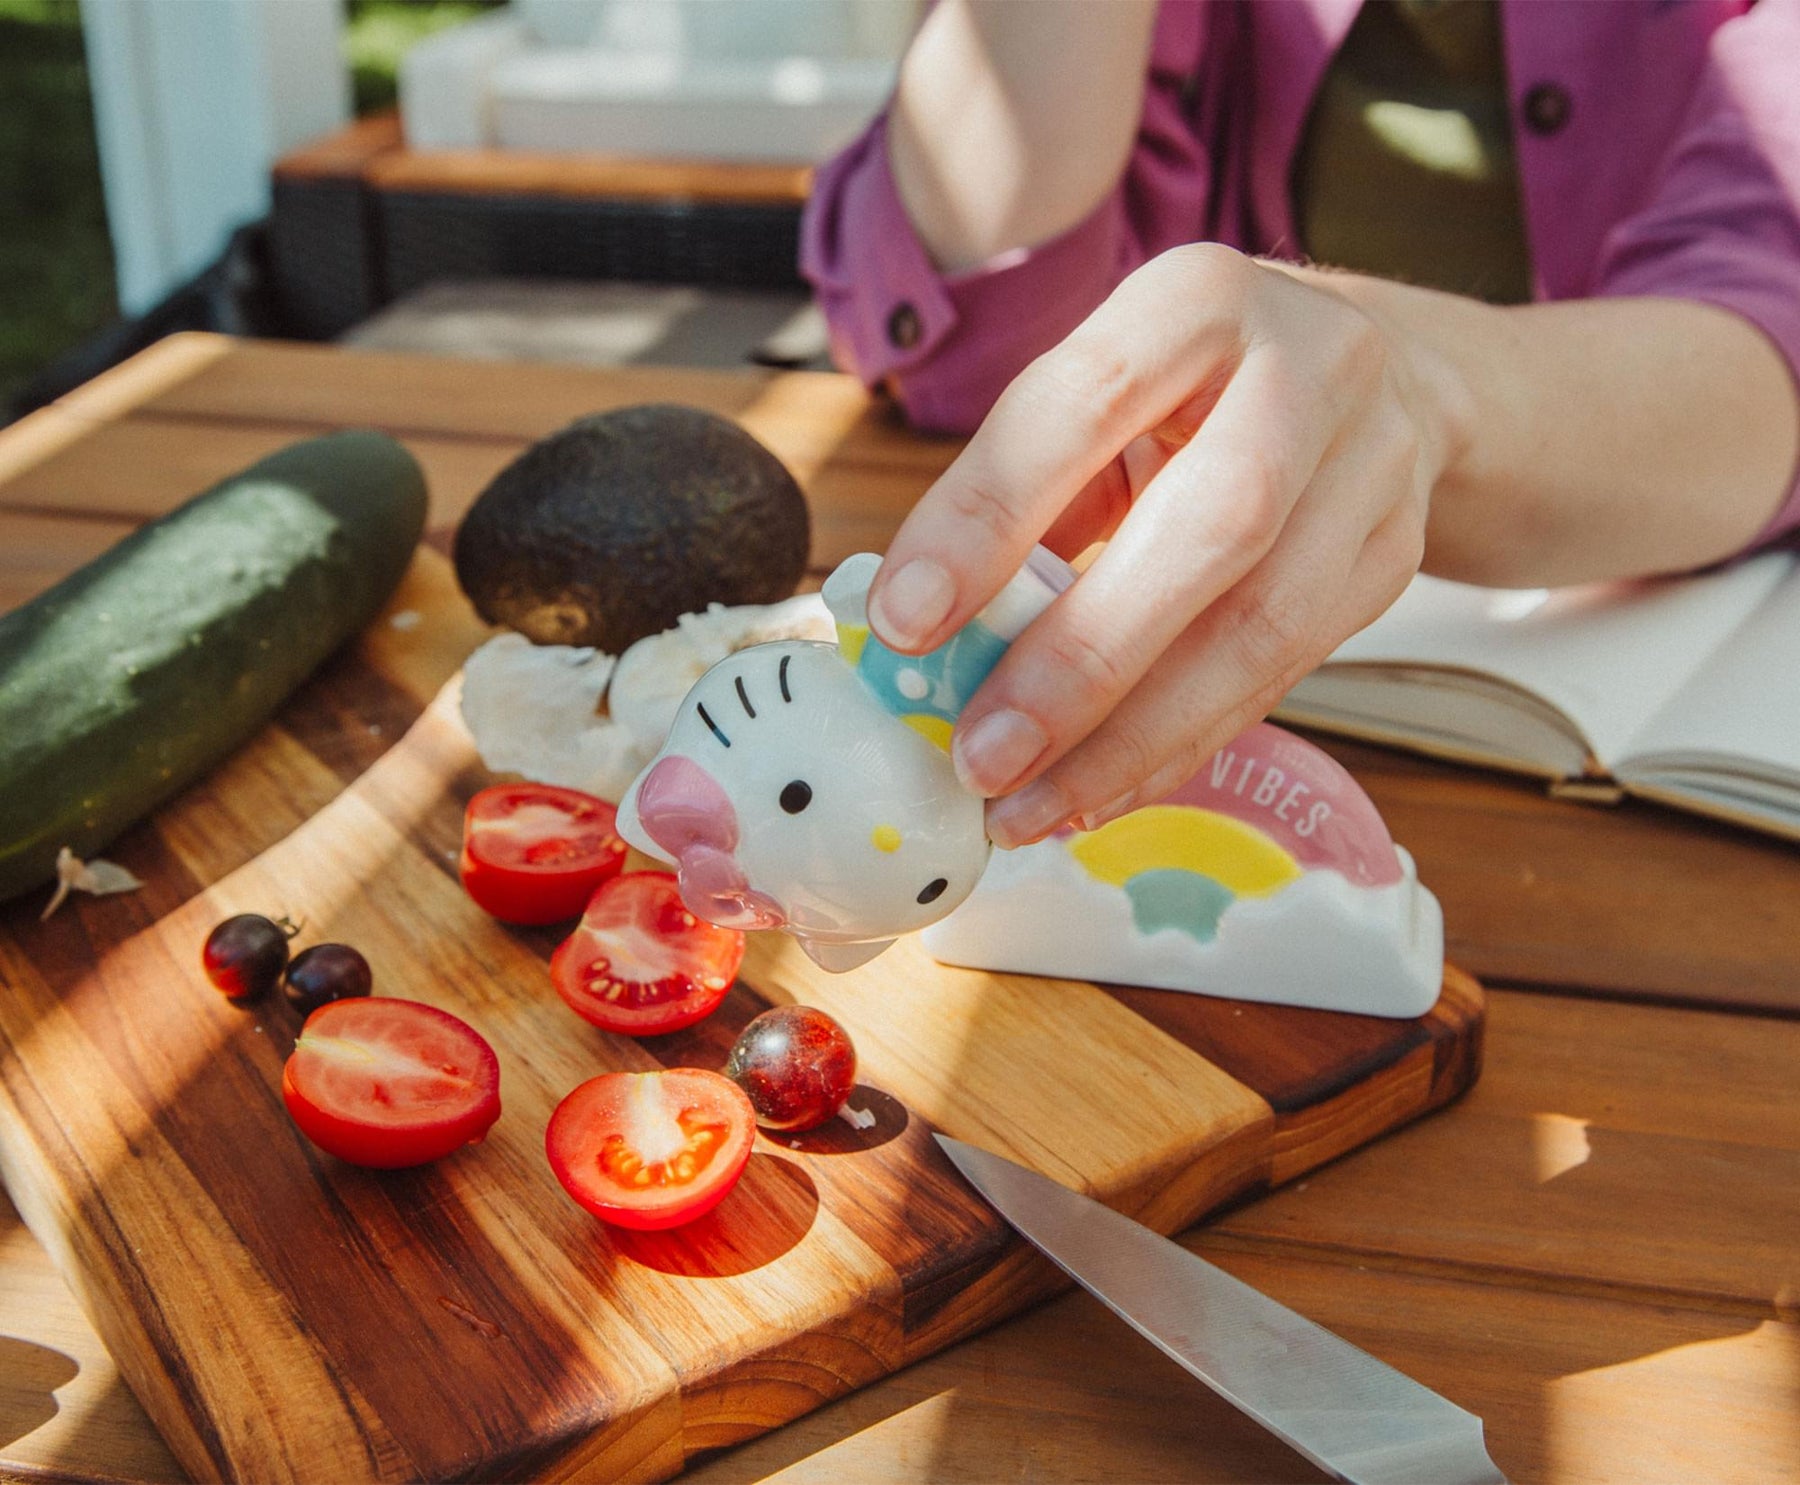 Pikachu Kitchen Ceramic Salt & Pepper Shaker Set